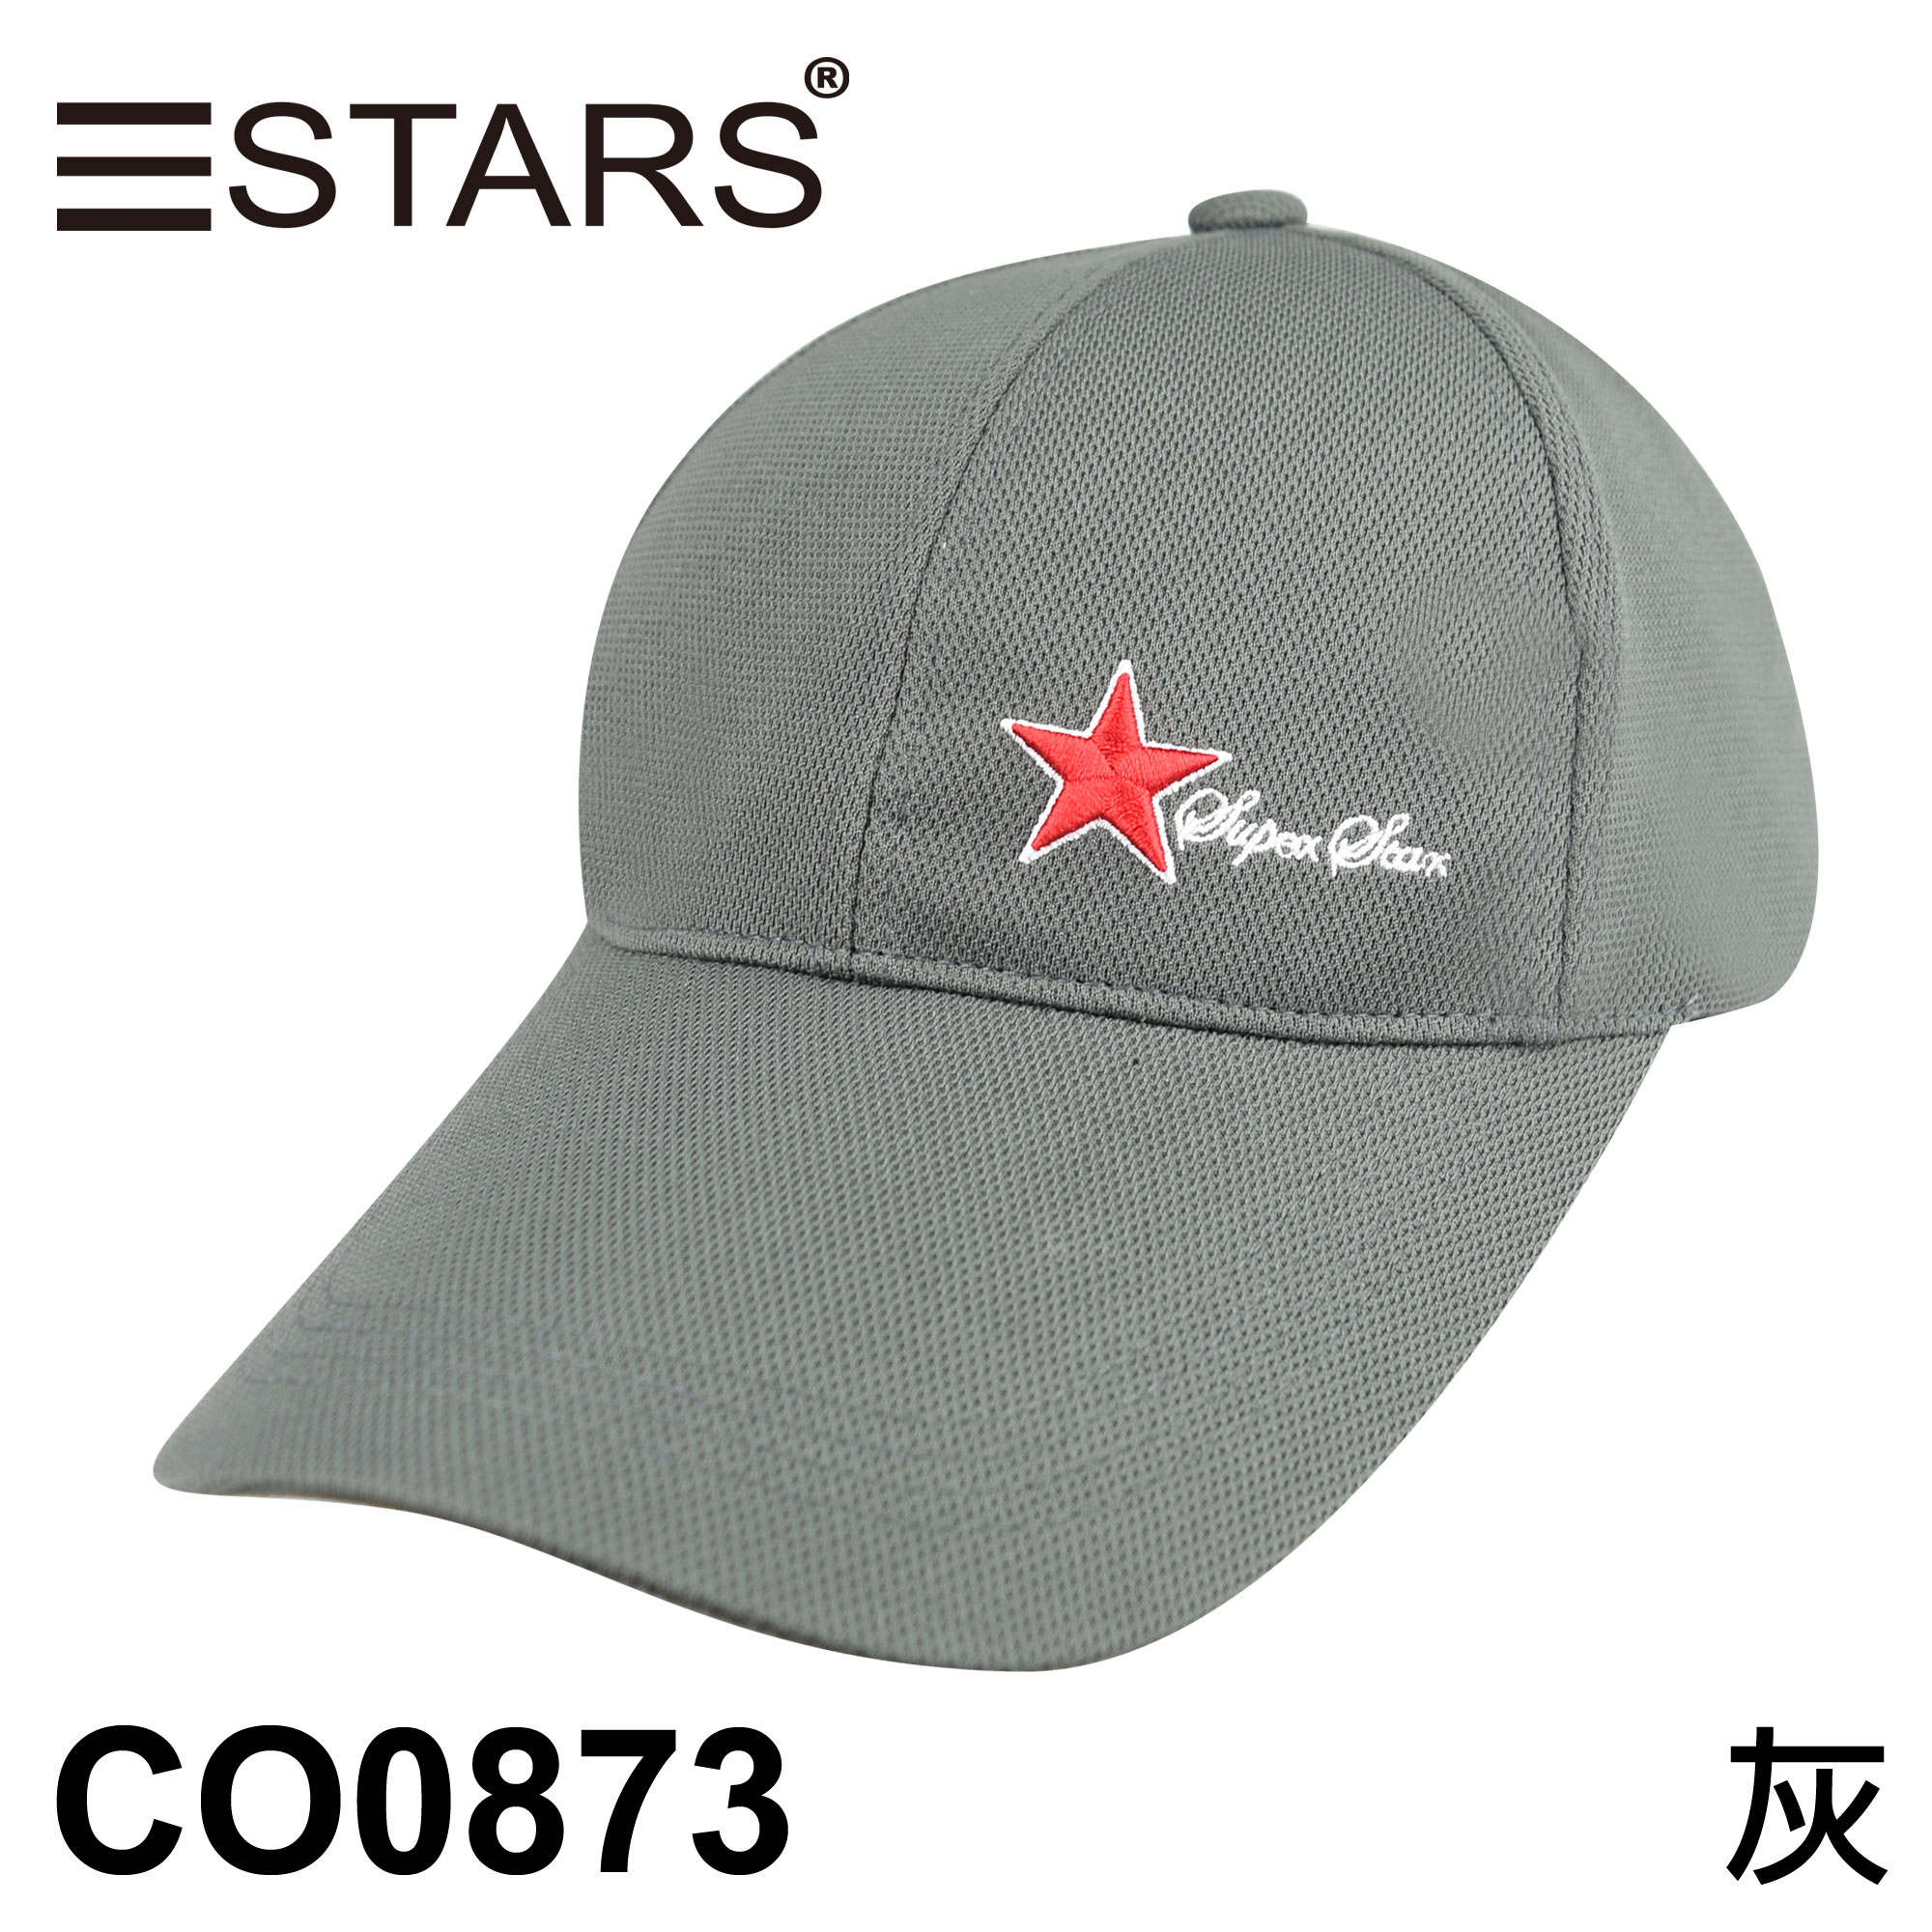 CO0873 素色PK布球帽 SUPER STAR 超級星星 三星製帽